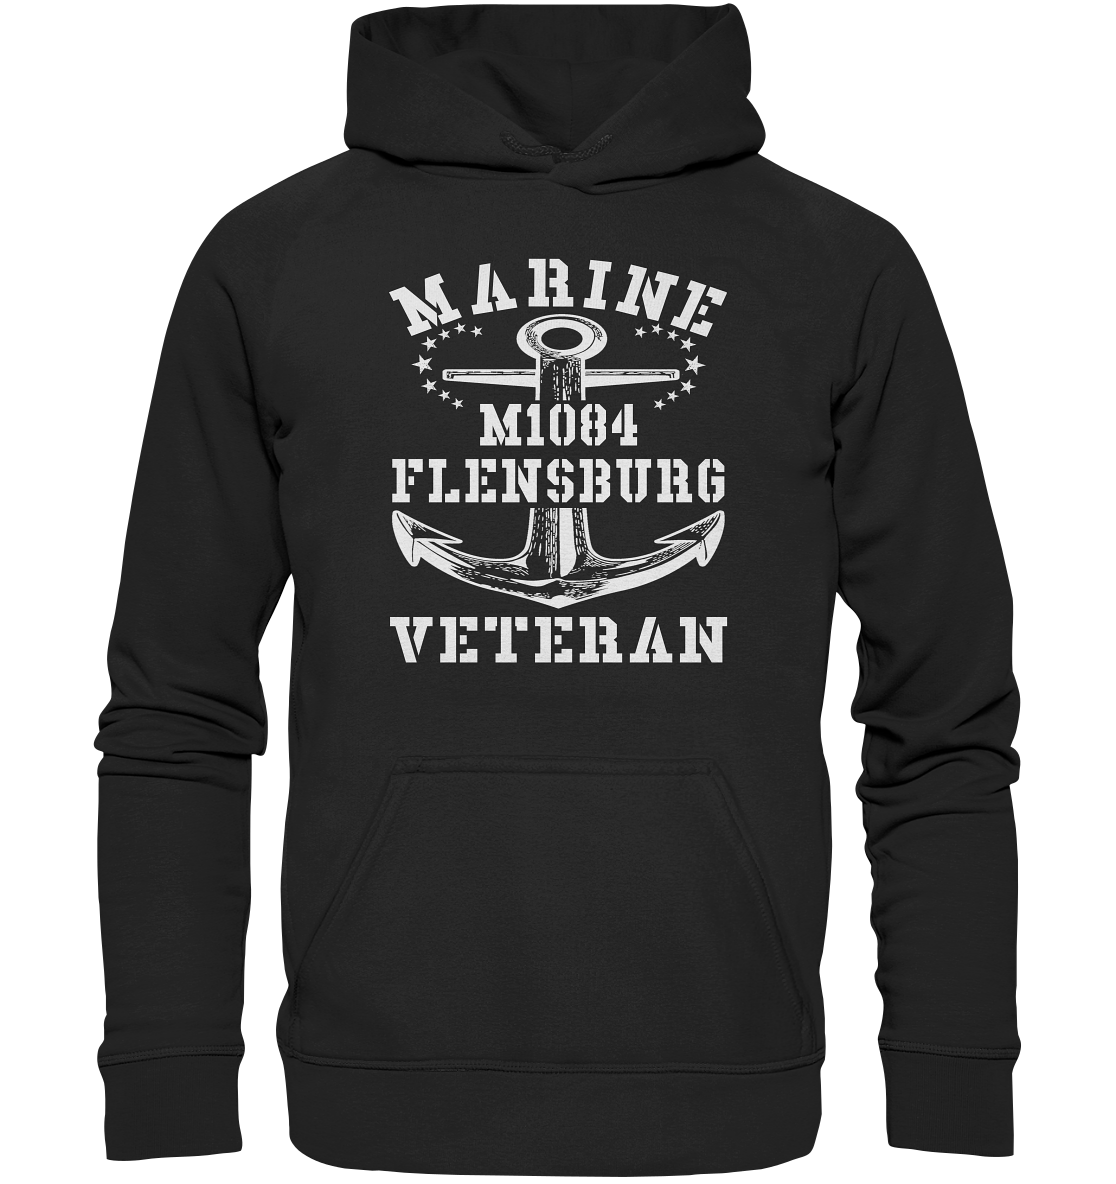 Marine Veteran M1084 FLENSBURG - Basic Unisex Hoodie